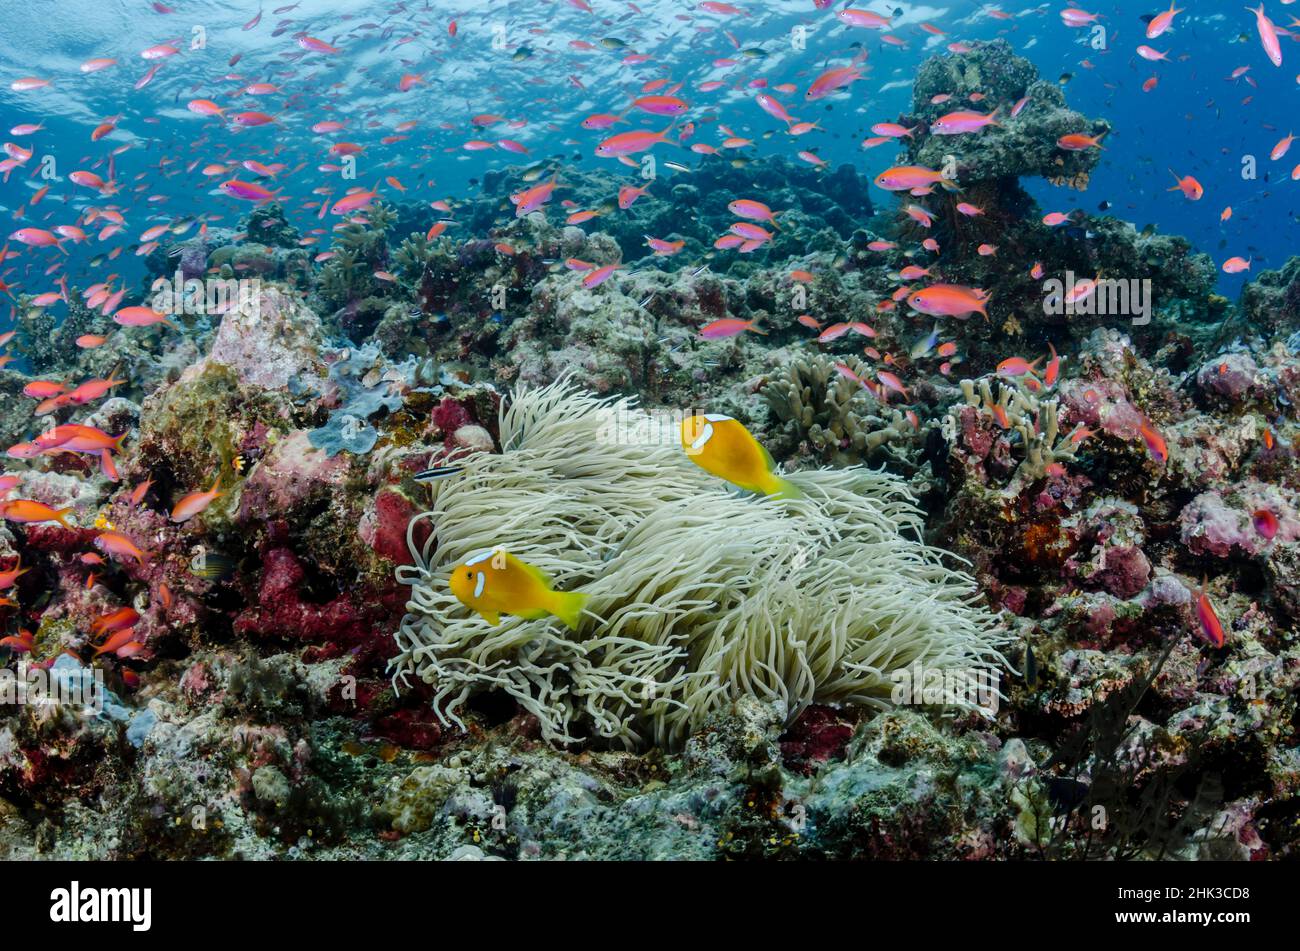 South Pacific, Solomon Islands. Reefscape of fish and corals. Credit as: Jones & Shimlock / Jaynes Gallery / DanitaDelimont.com Stock Photo